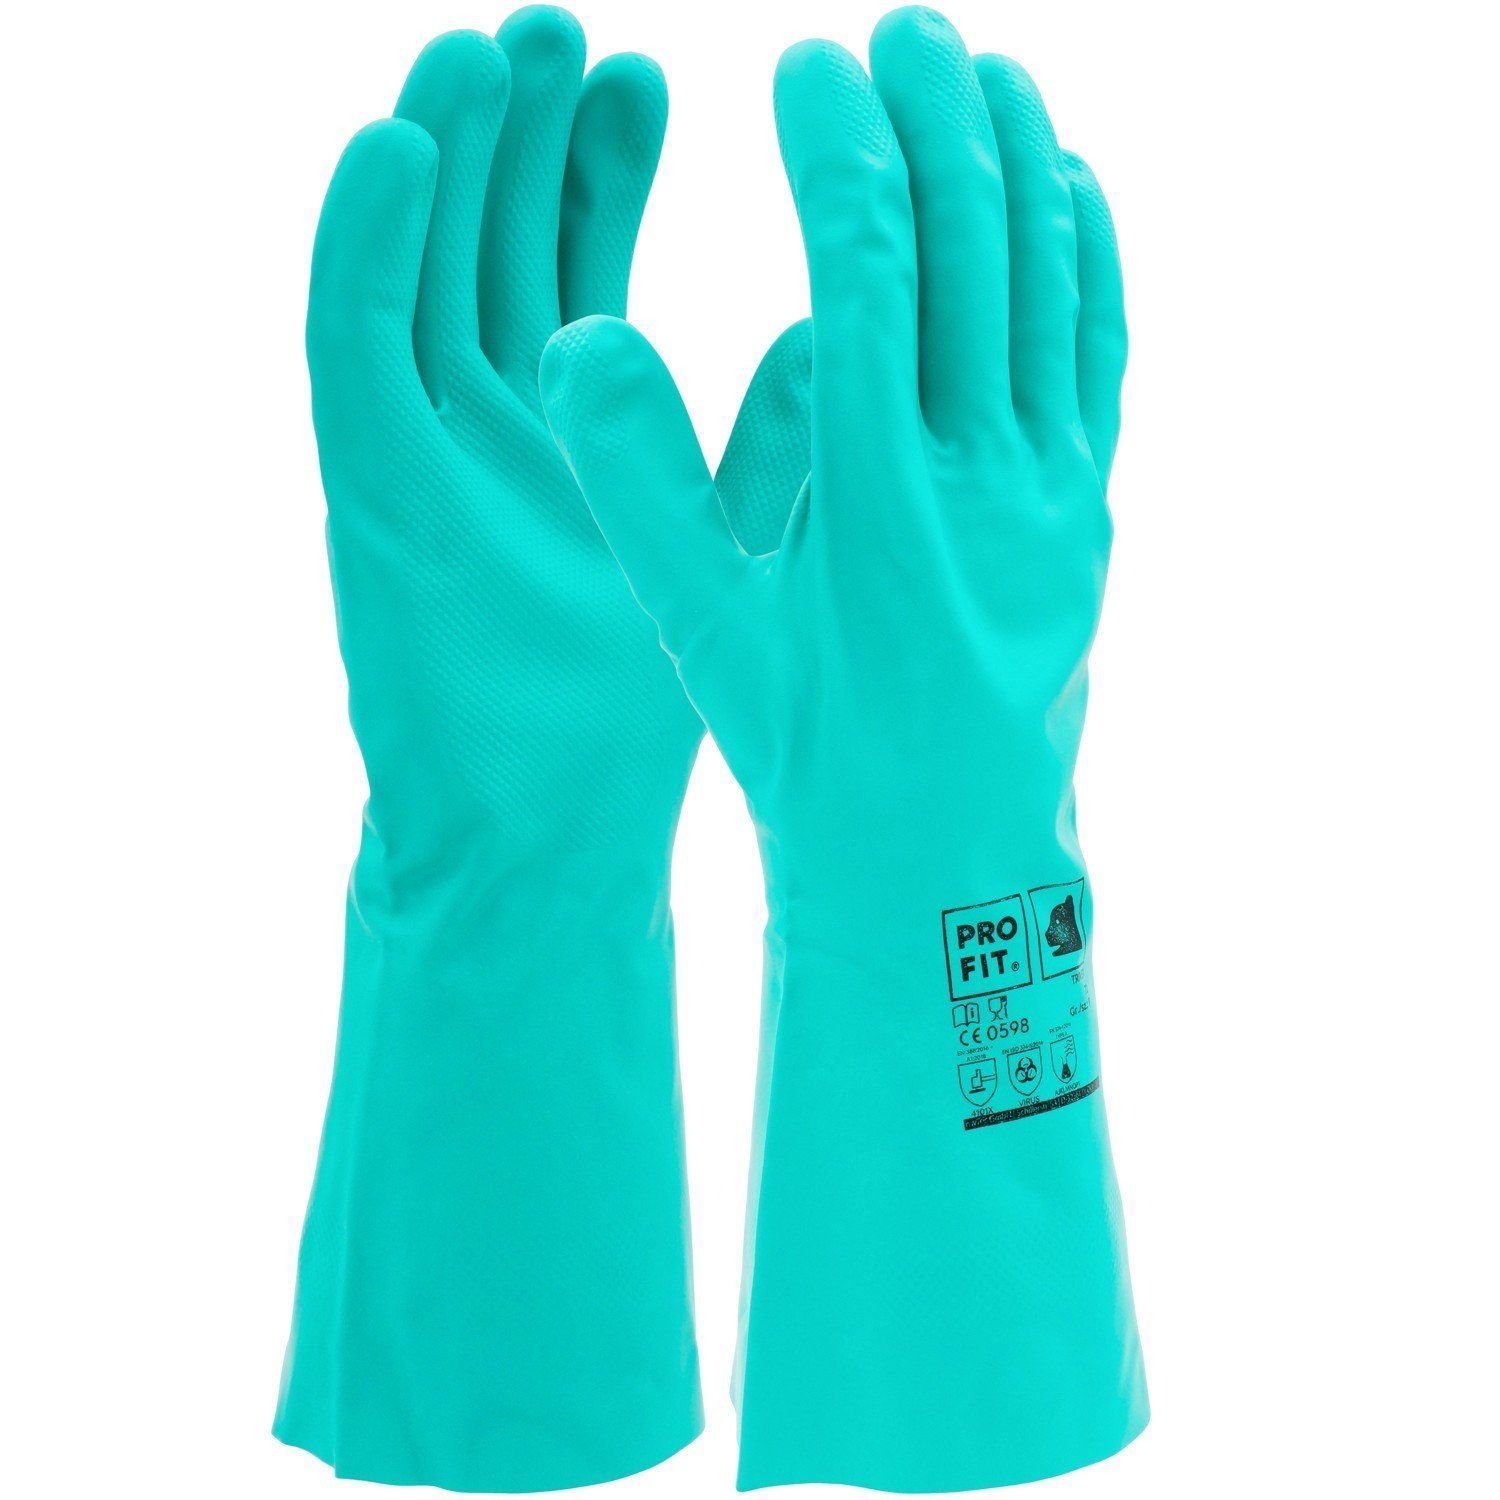 (12, Trivex Paar) Lanka' 'Made FIT Fitzner PRO by Chemikalienschutzhandschuh, Nitril Sri Nitril-Handschuhe in